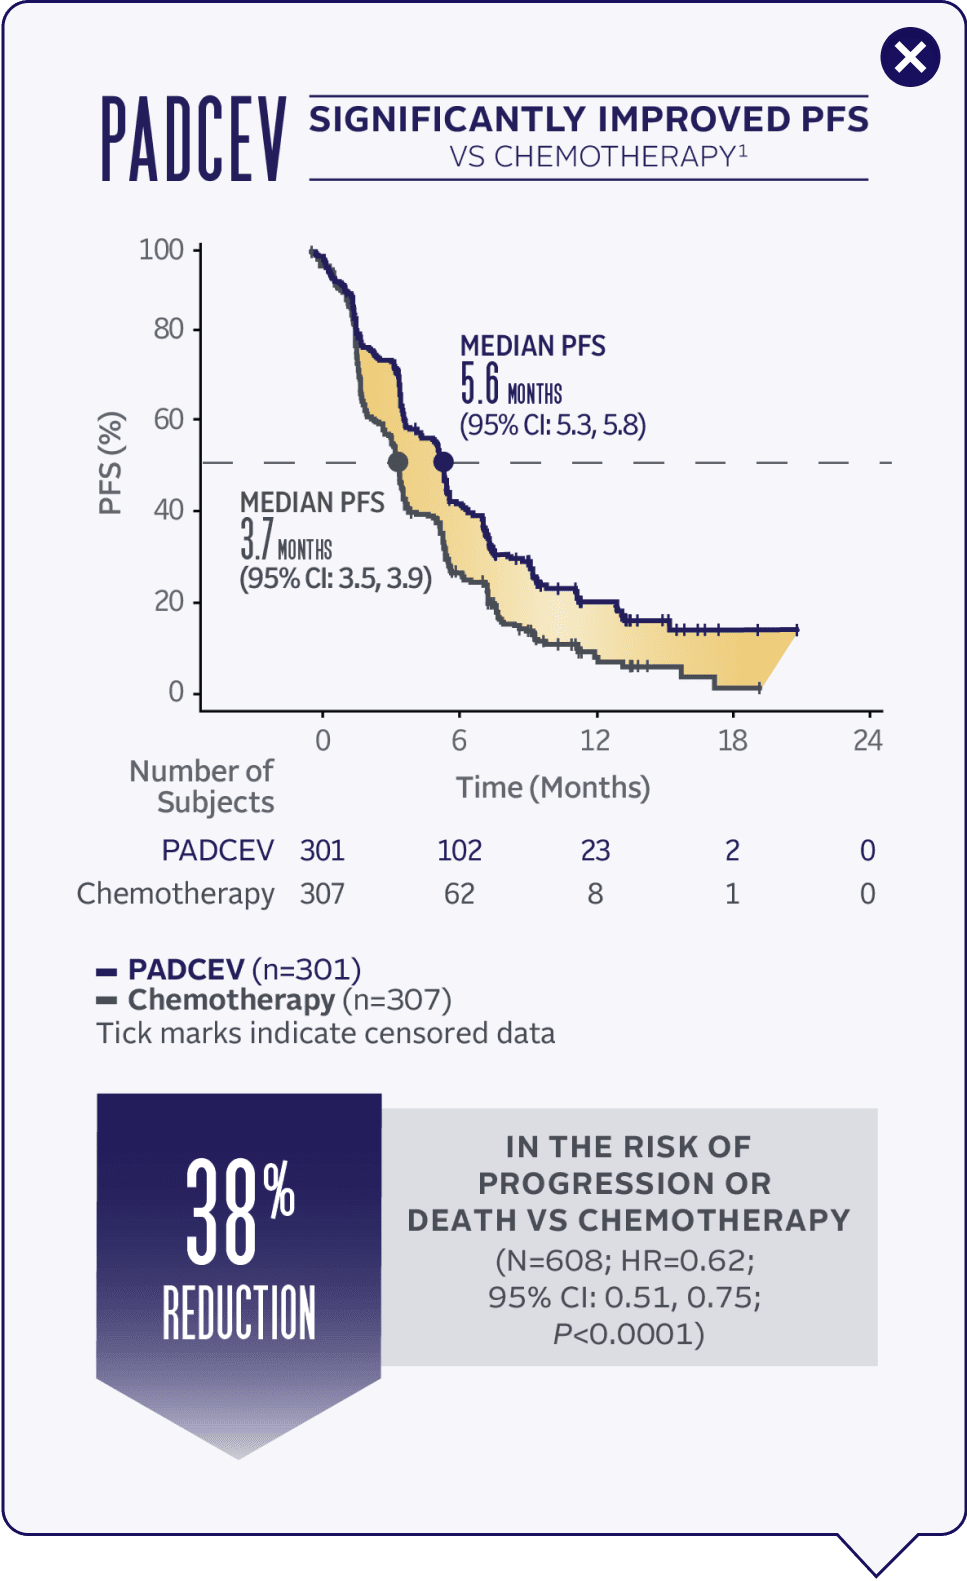 PADCEV had a median progression-free survival of 5.6 months. Chemotherapy had a median progression-free survival of 3.7 months.